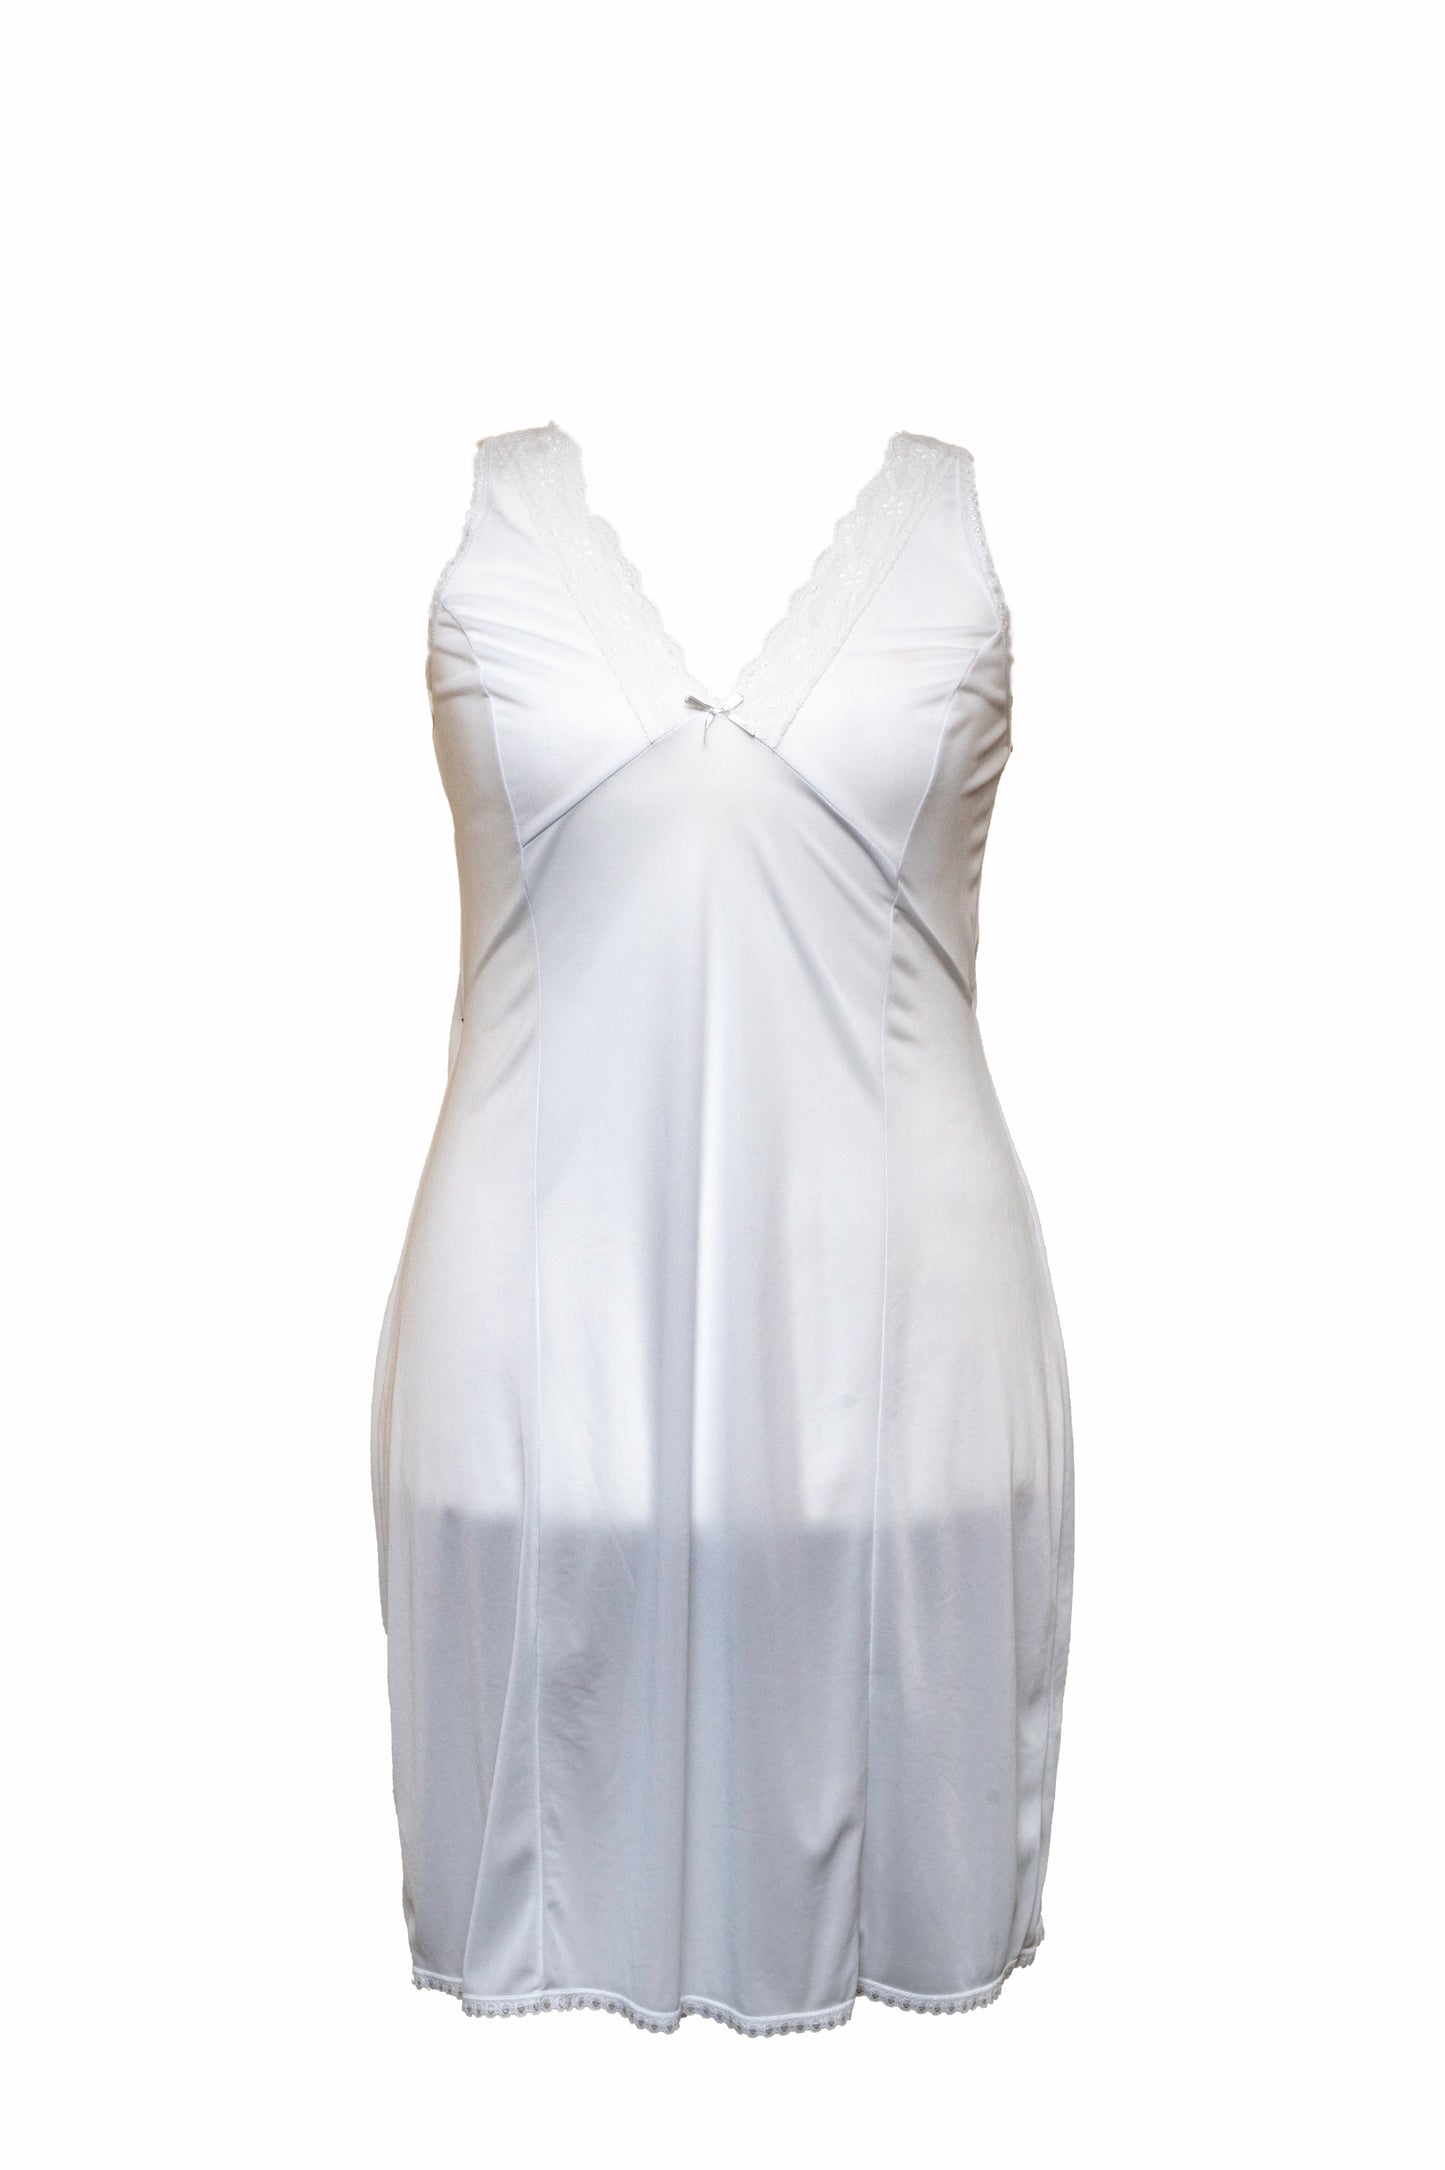 Ladies-Full Slip Petticoat-Built-up Shoulder Strap-White